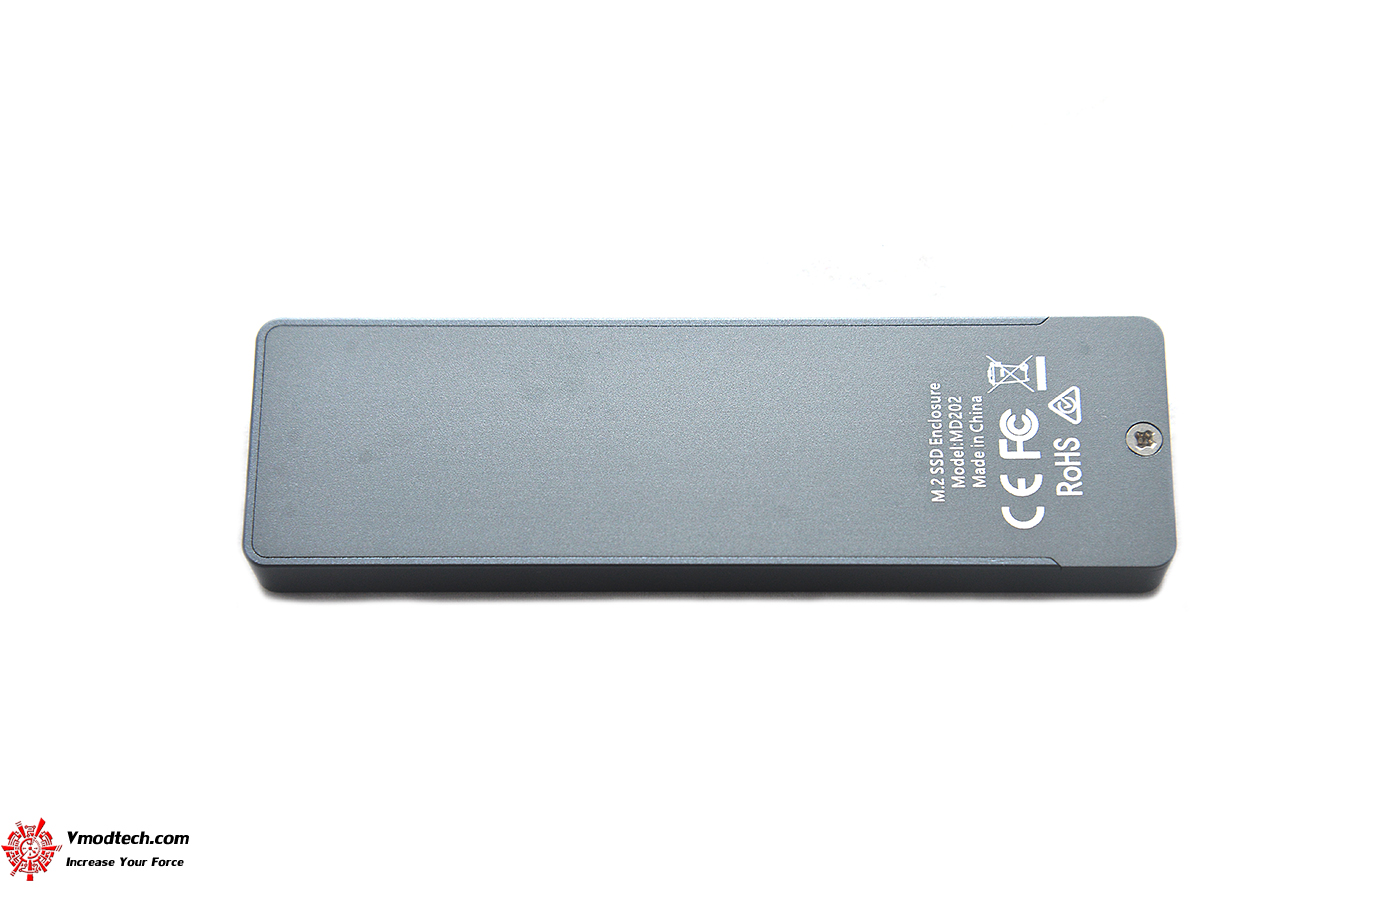 dsc 4072 HIKSEMI M.2 SSD ENCLOSURE MD202 REVIEW